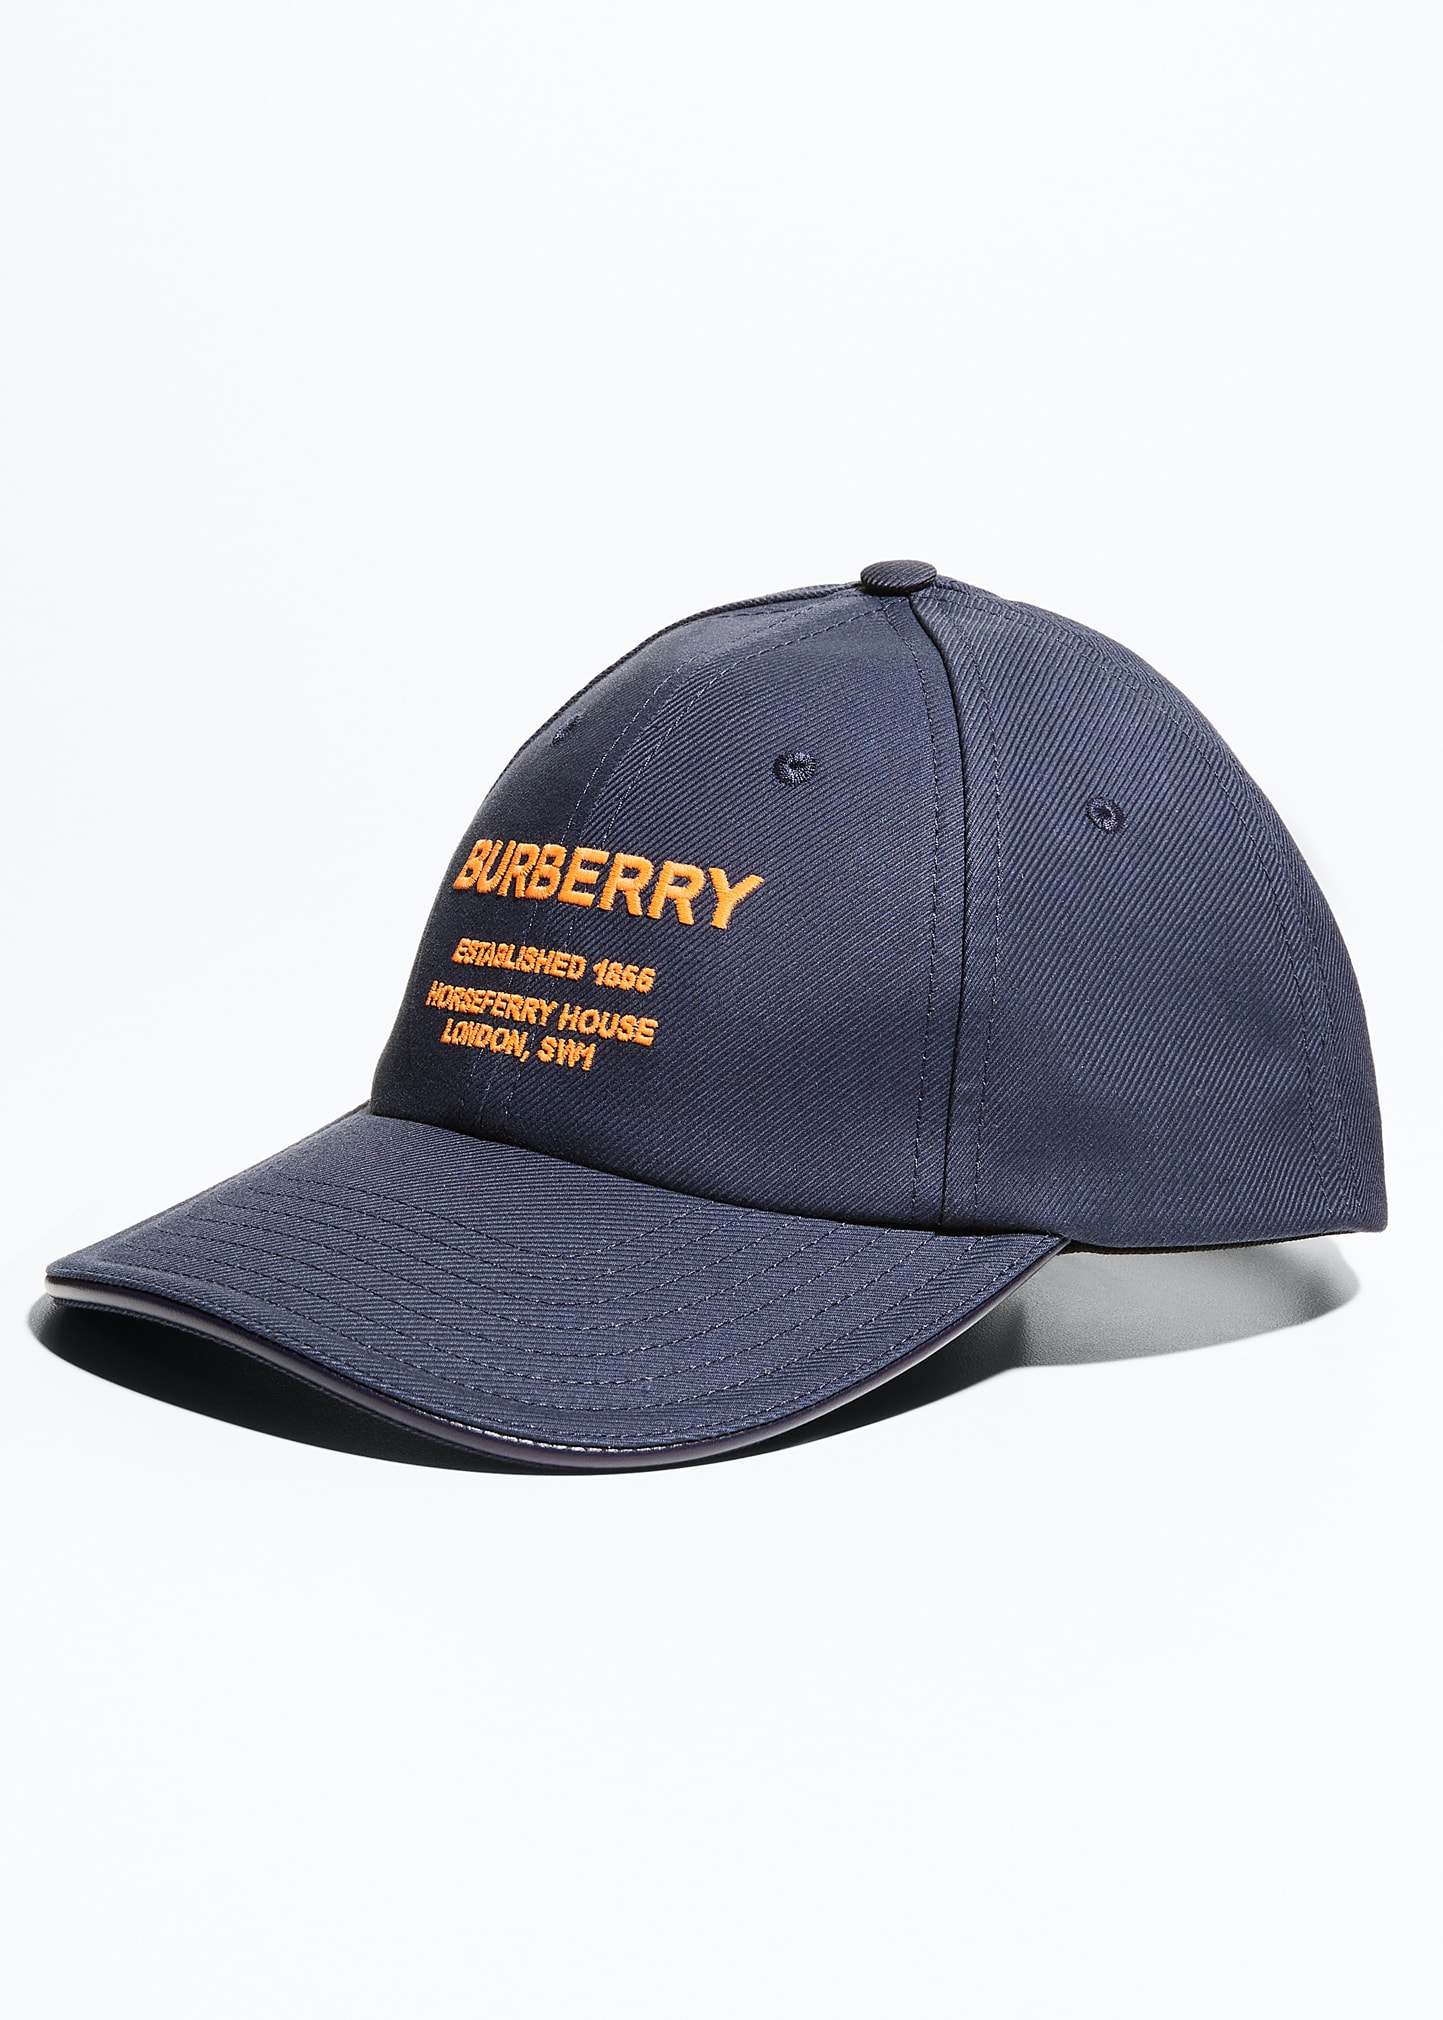 BURBERRY Cap for Men | ModeSens